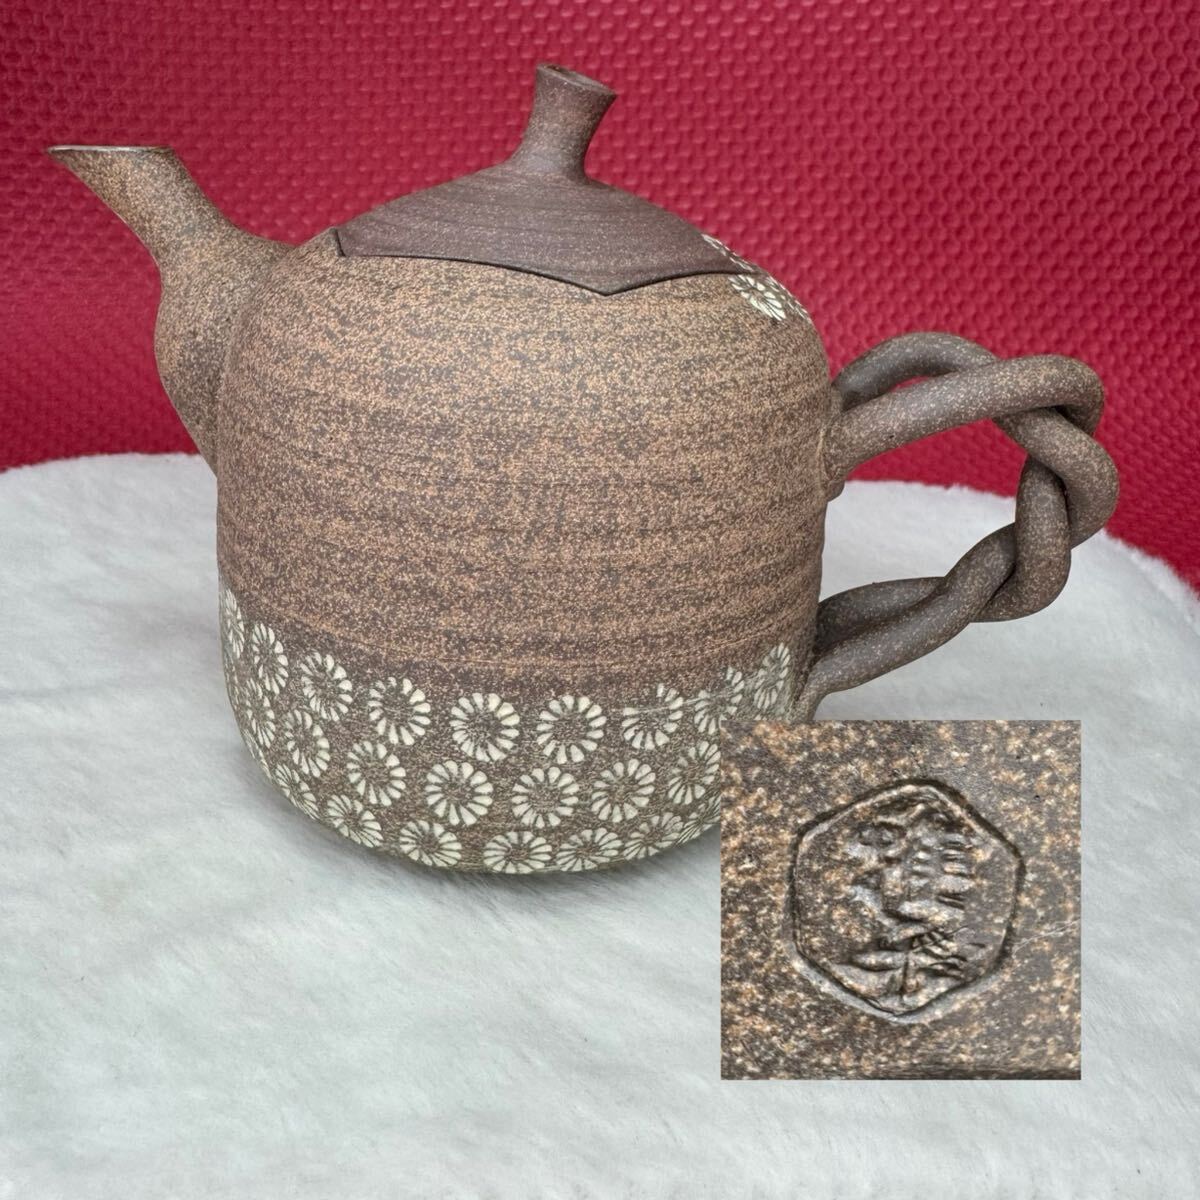 清水焼 茶道具 煎茶道具 茶器 和食器 ブランド食器 陶器 焼物 の画像1